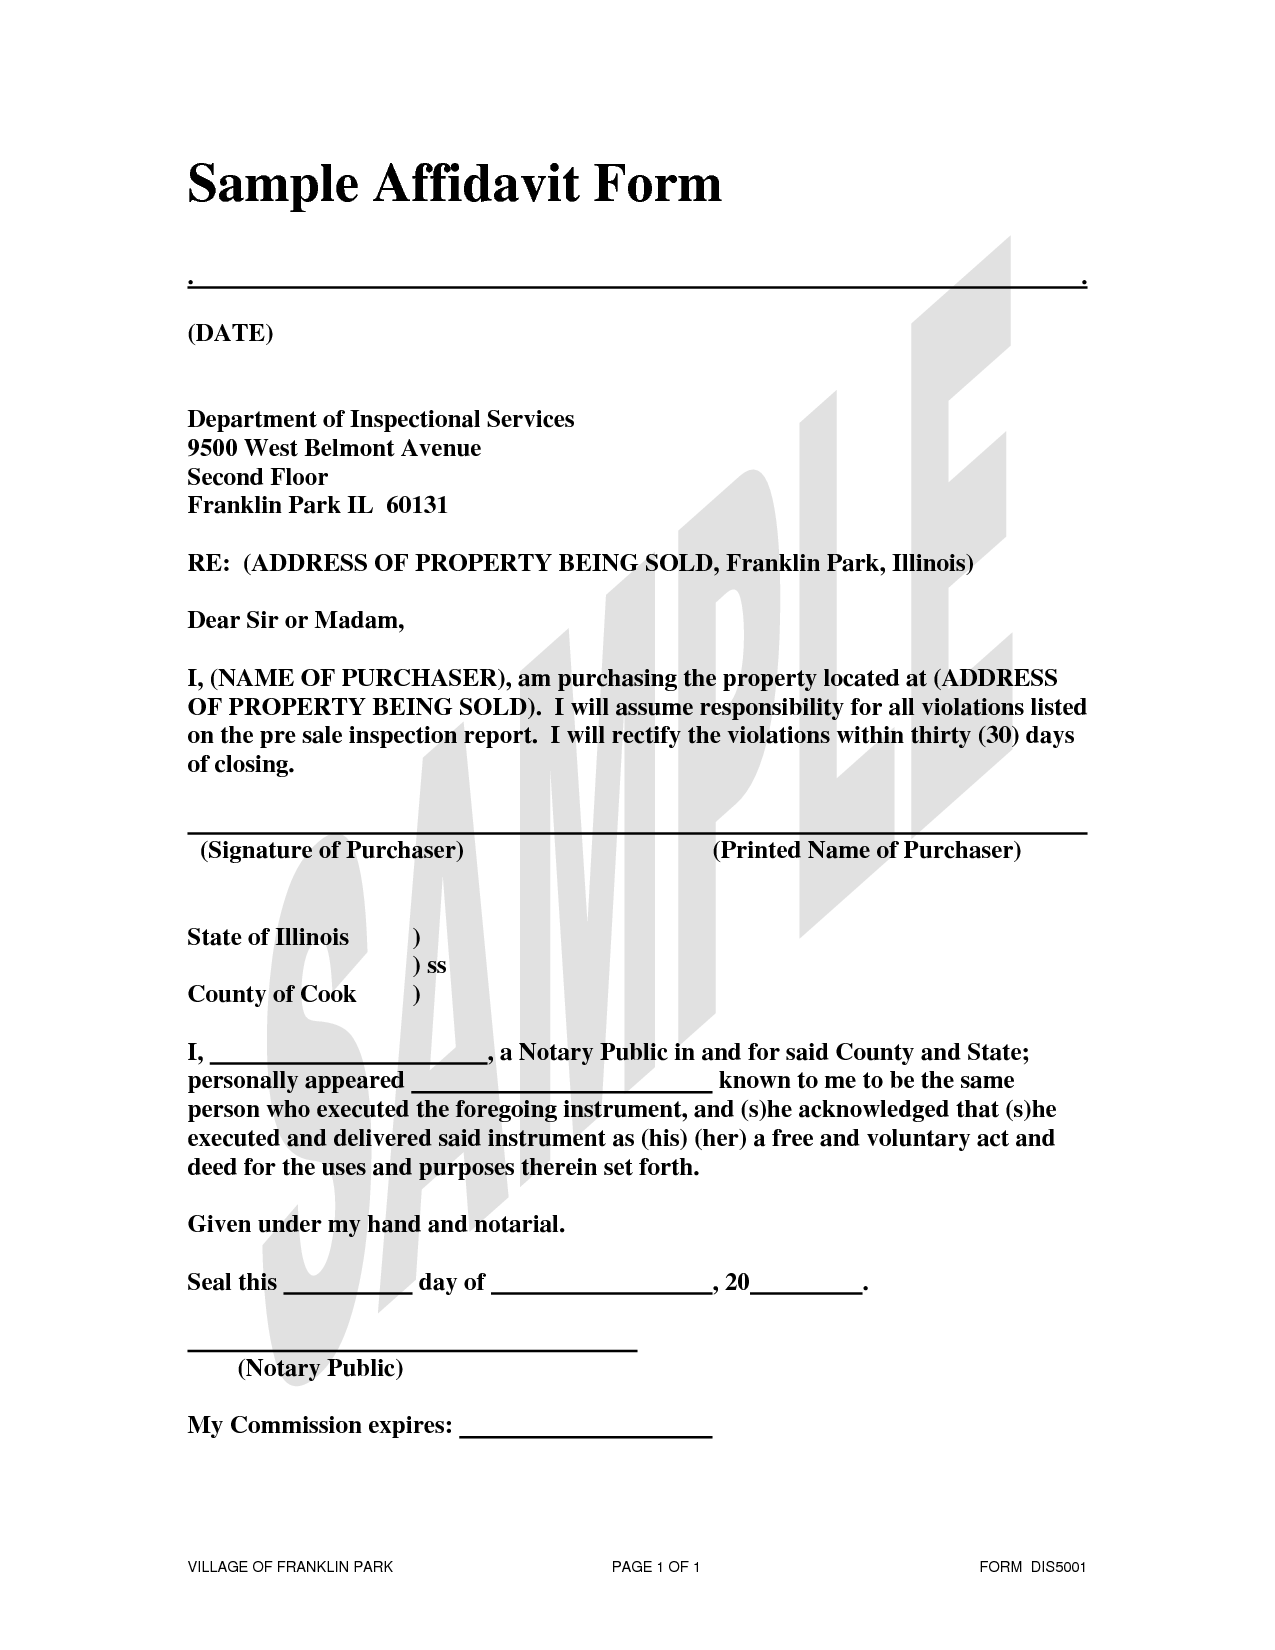 affidavit-form-free-printable-documents